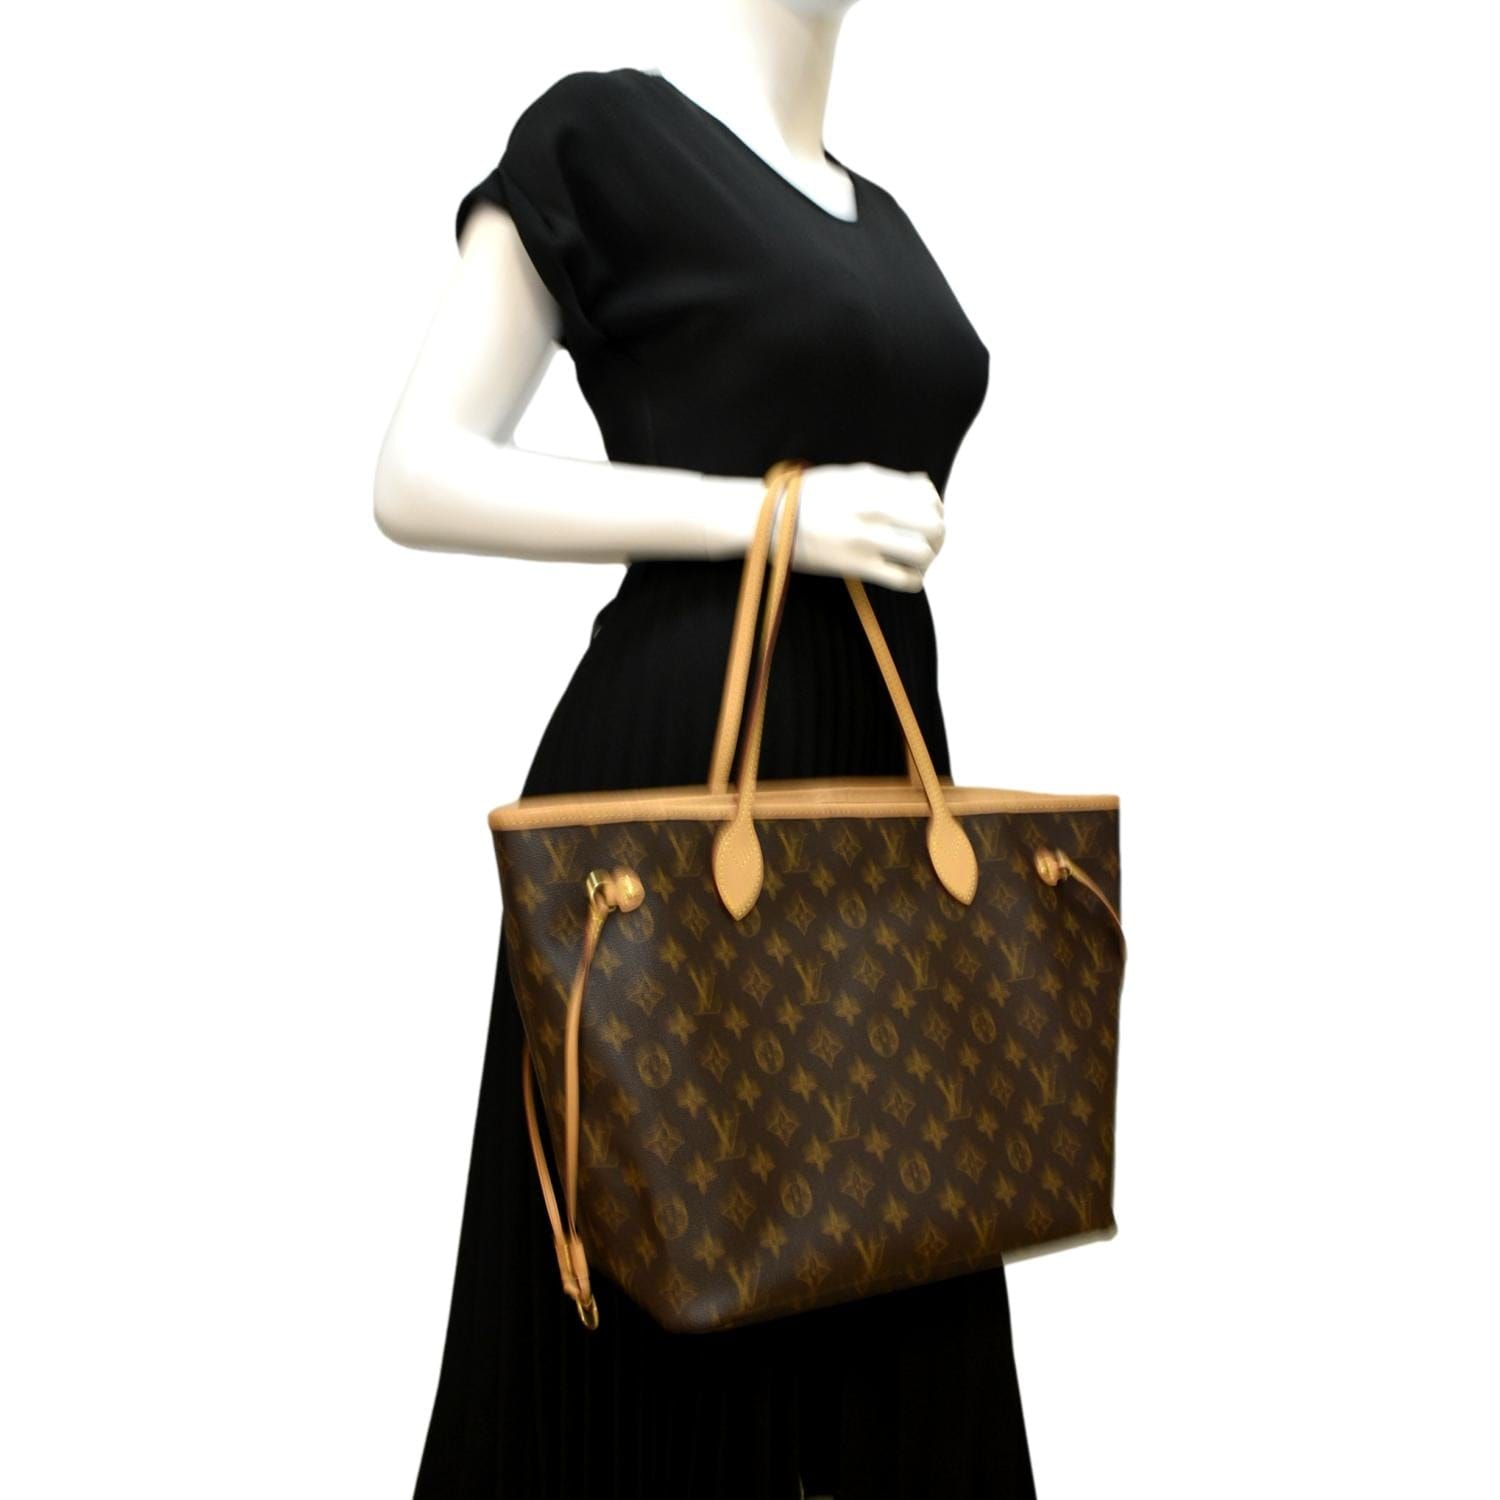 Louis Vuitton, Bags, Louis Vuitton Neverfull Mm Monogram Lv Brown Tan  Purse Handbag Bag Authentic